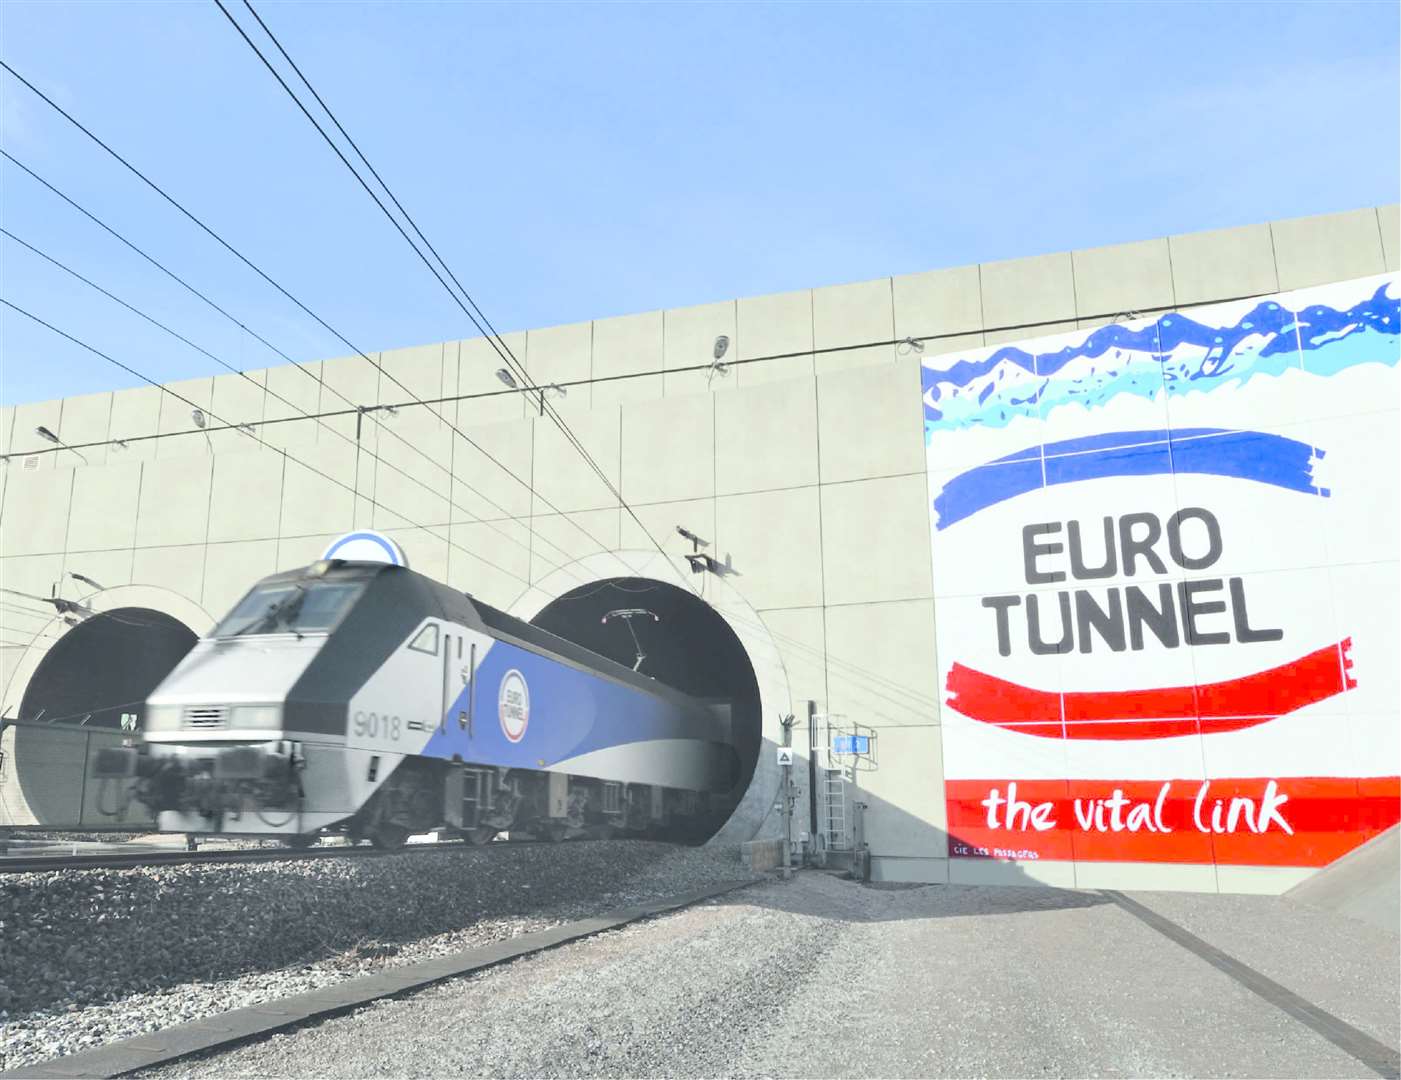 Eurotunnel remains optimistic despite travel restrictions hitting its bottom line hard